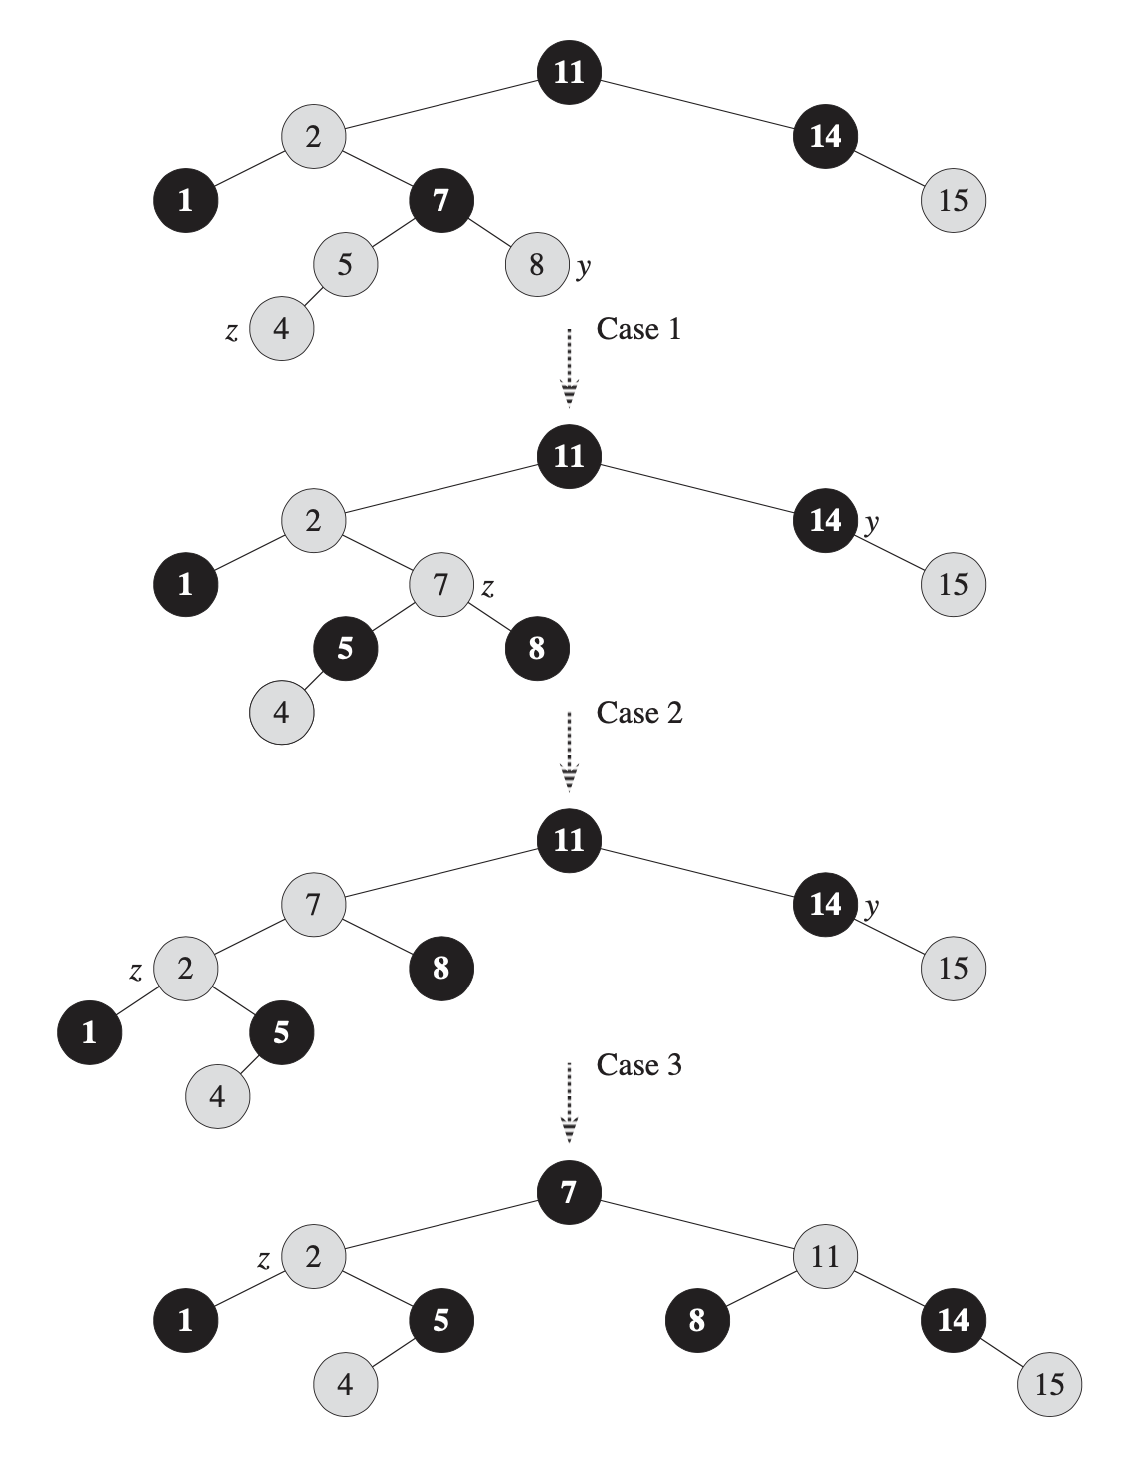 Red-Black tree inserting node z